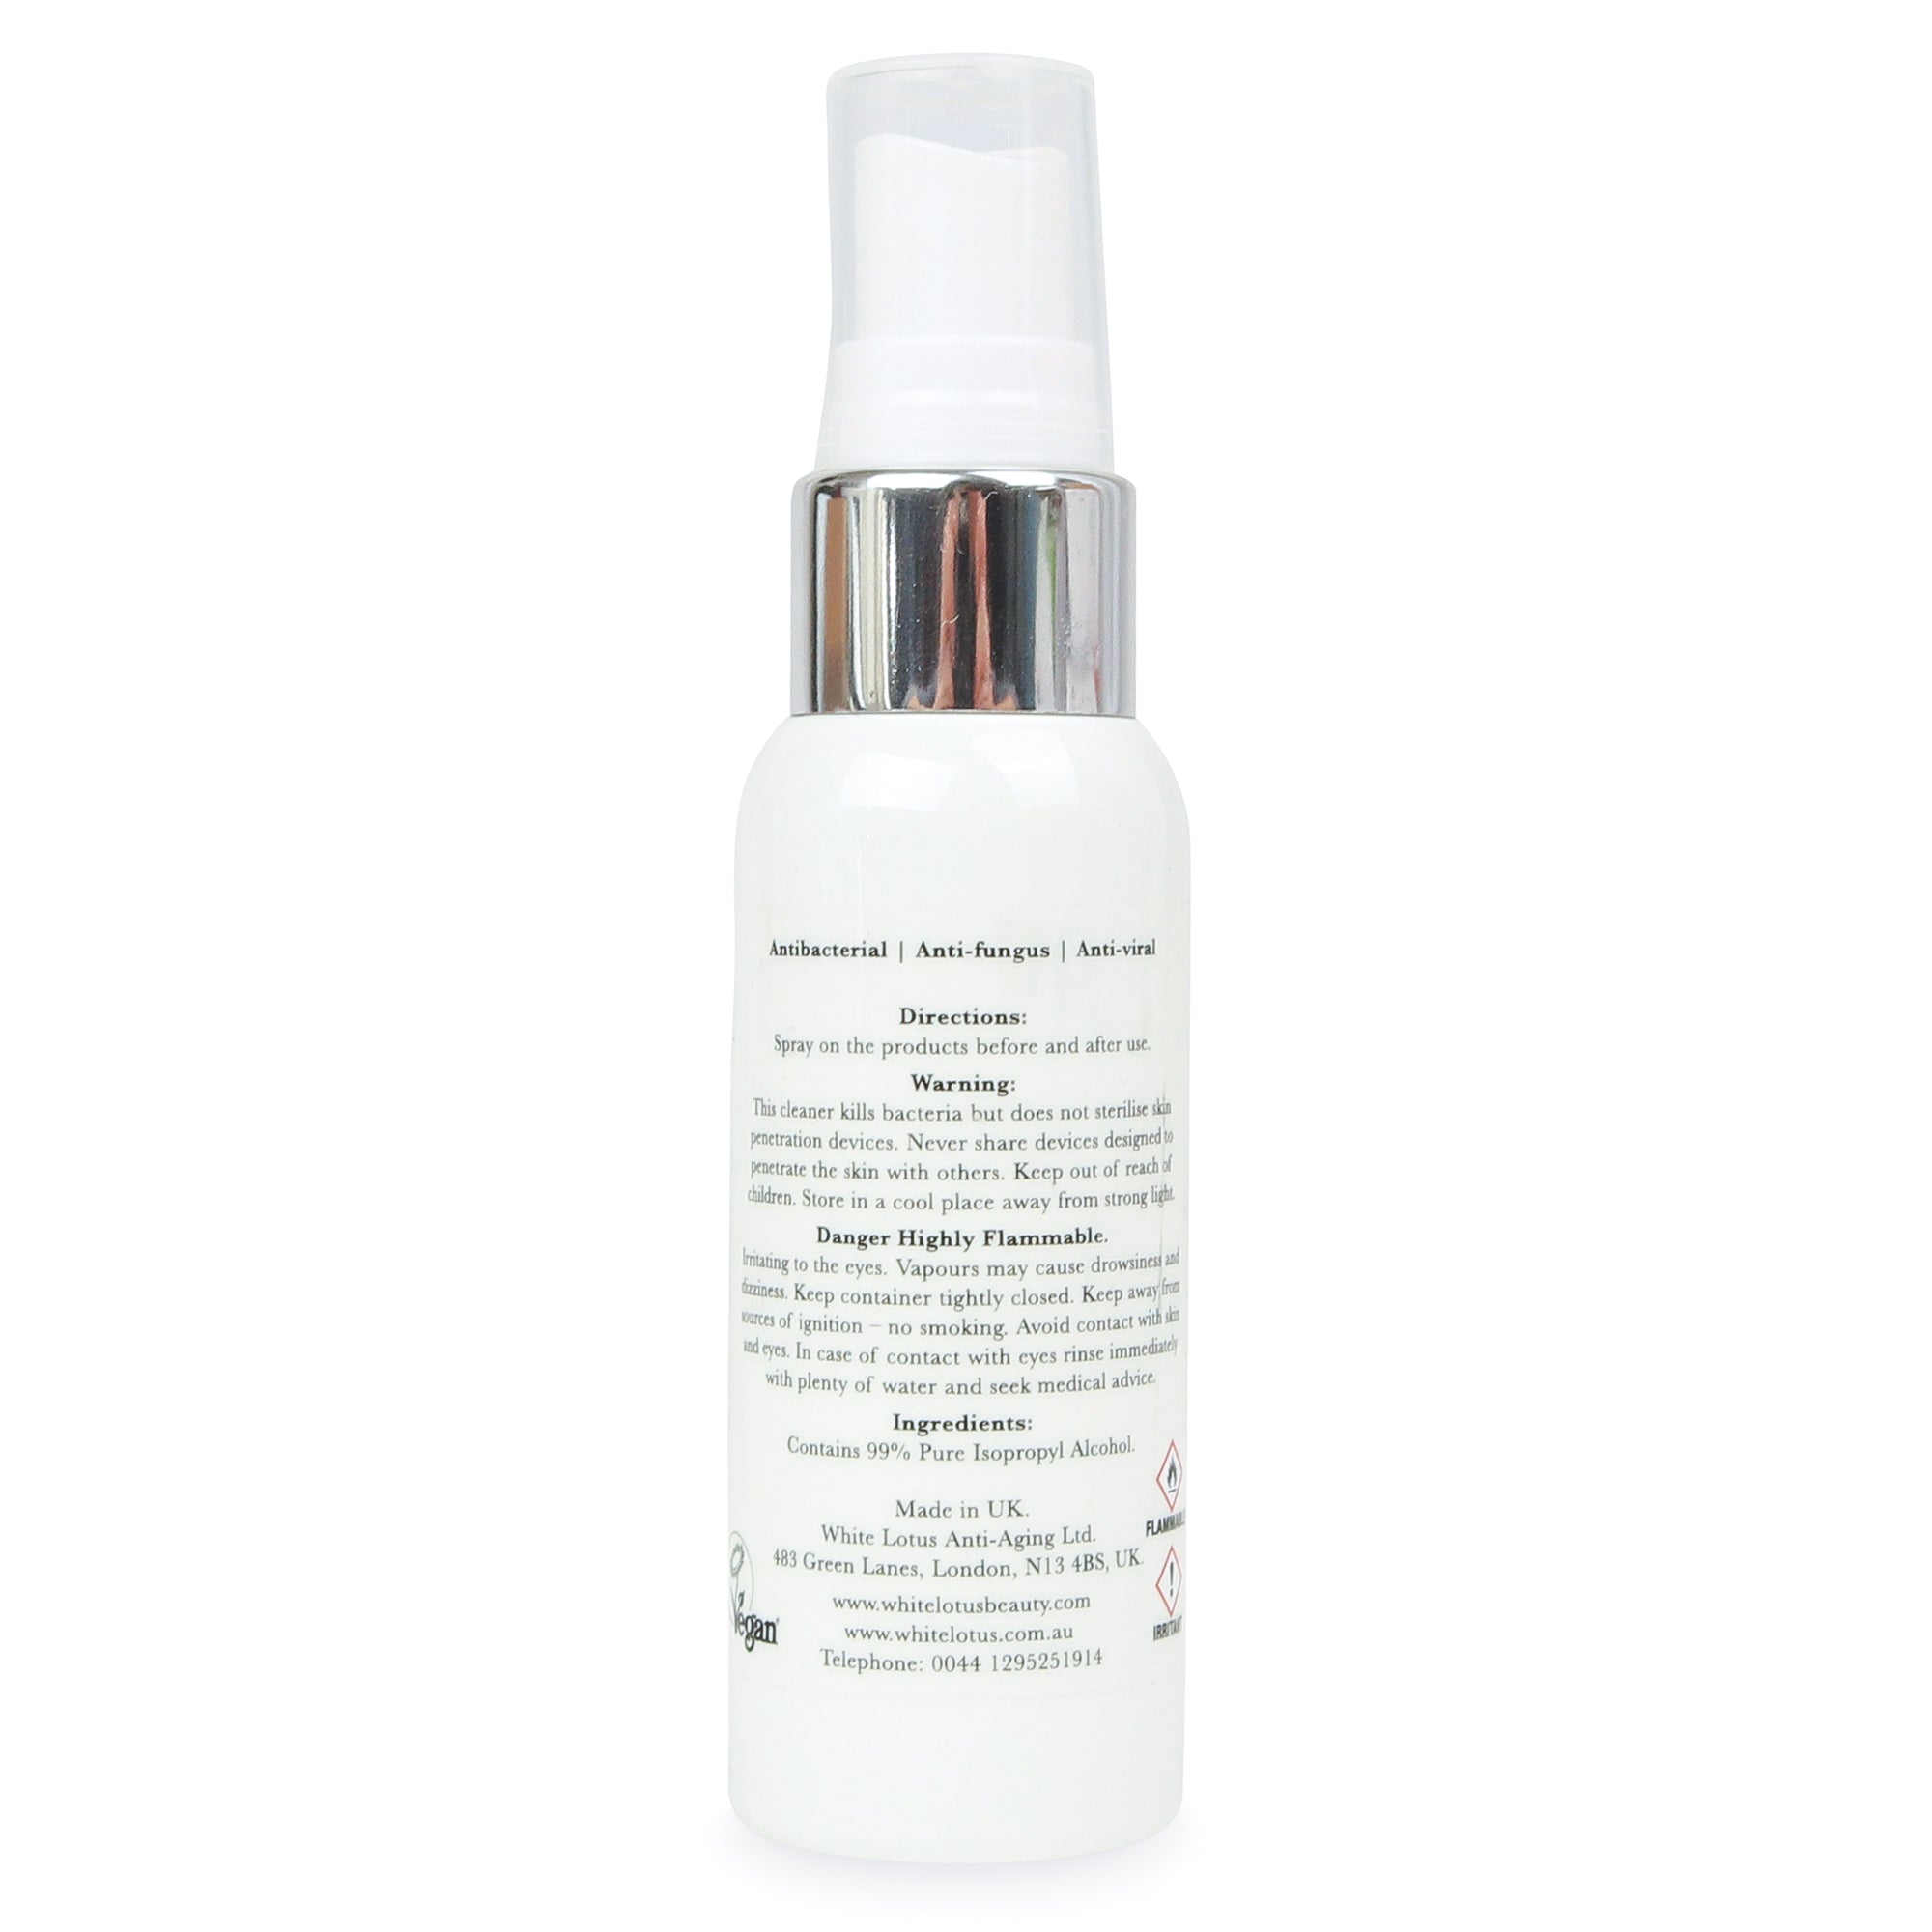 Skin Needling Roller / Dermastamp Cleaner -Anti Bacterial Isopropyl Alcohol Spray 50mL